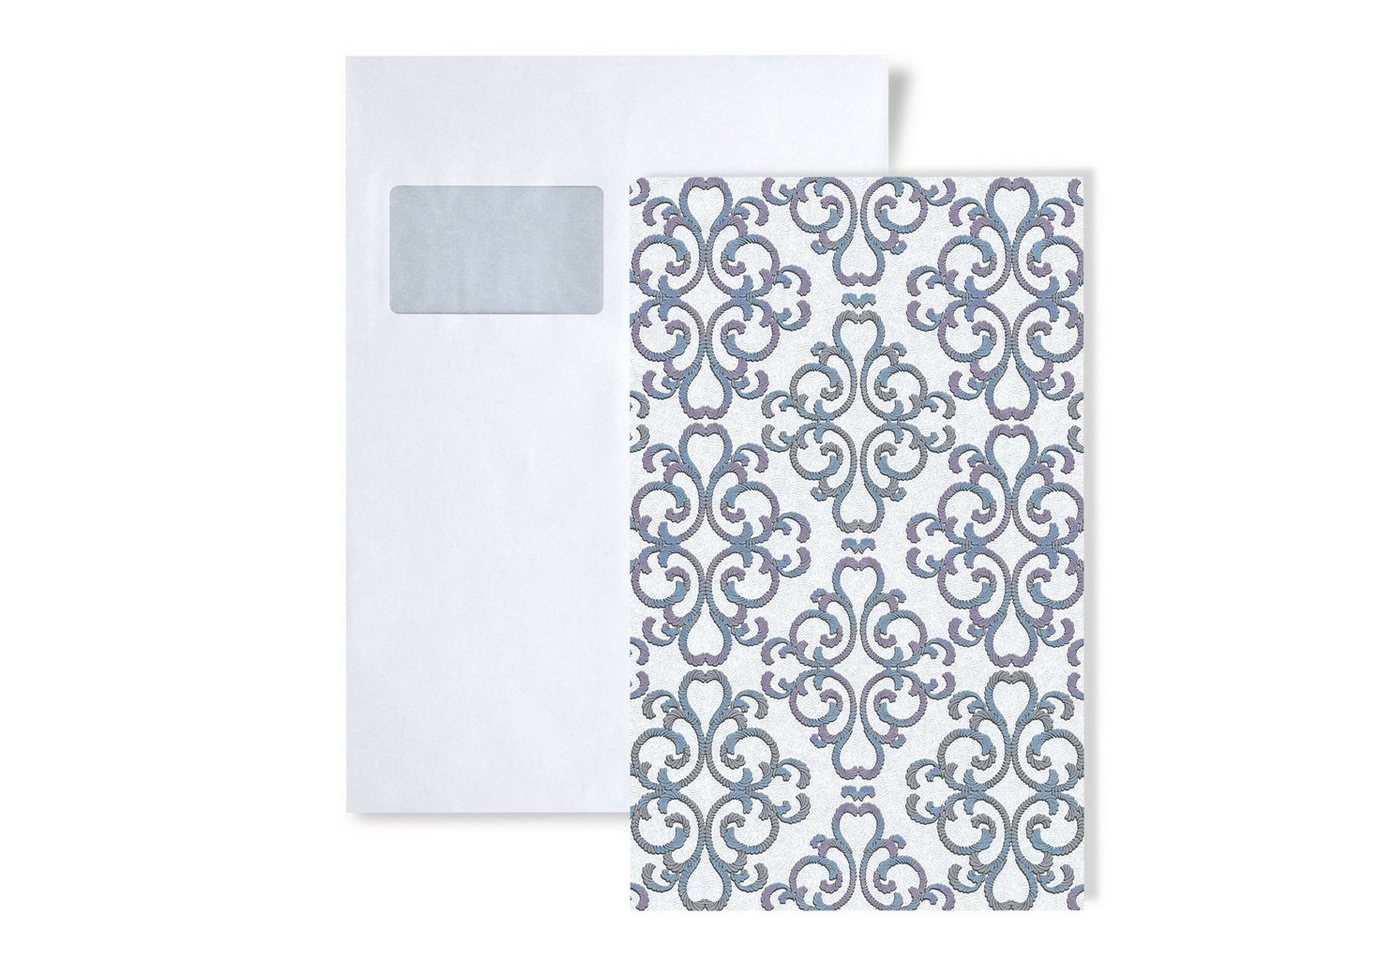 Edem Papiertapete S-85037BR30, glänzend, ornamental, Strukturmuster, Barock-Style, (1 Musterblatt, ca. A5-A4), weiß, türkis-blau, lila, silber von Edem